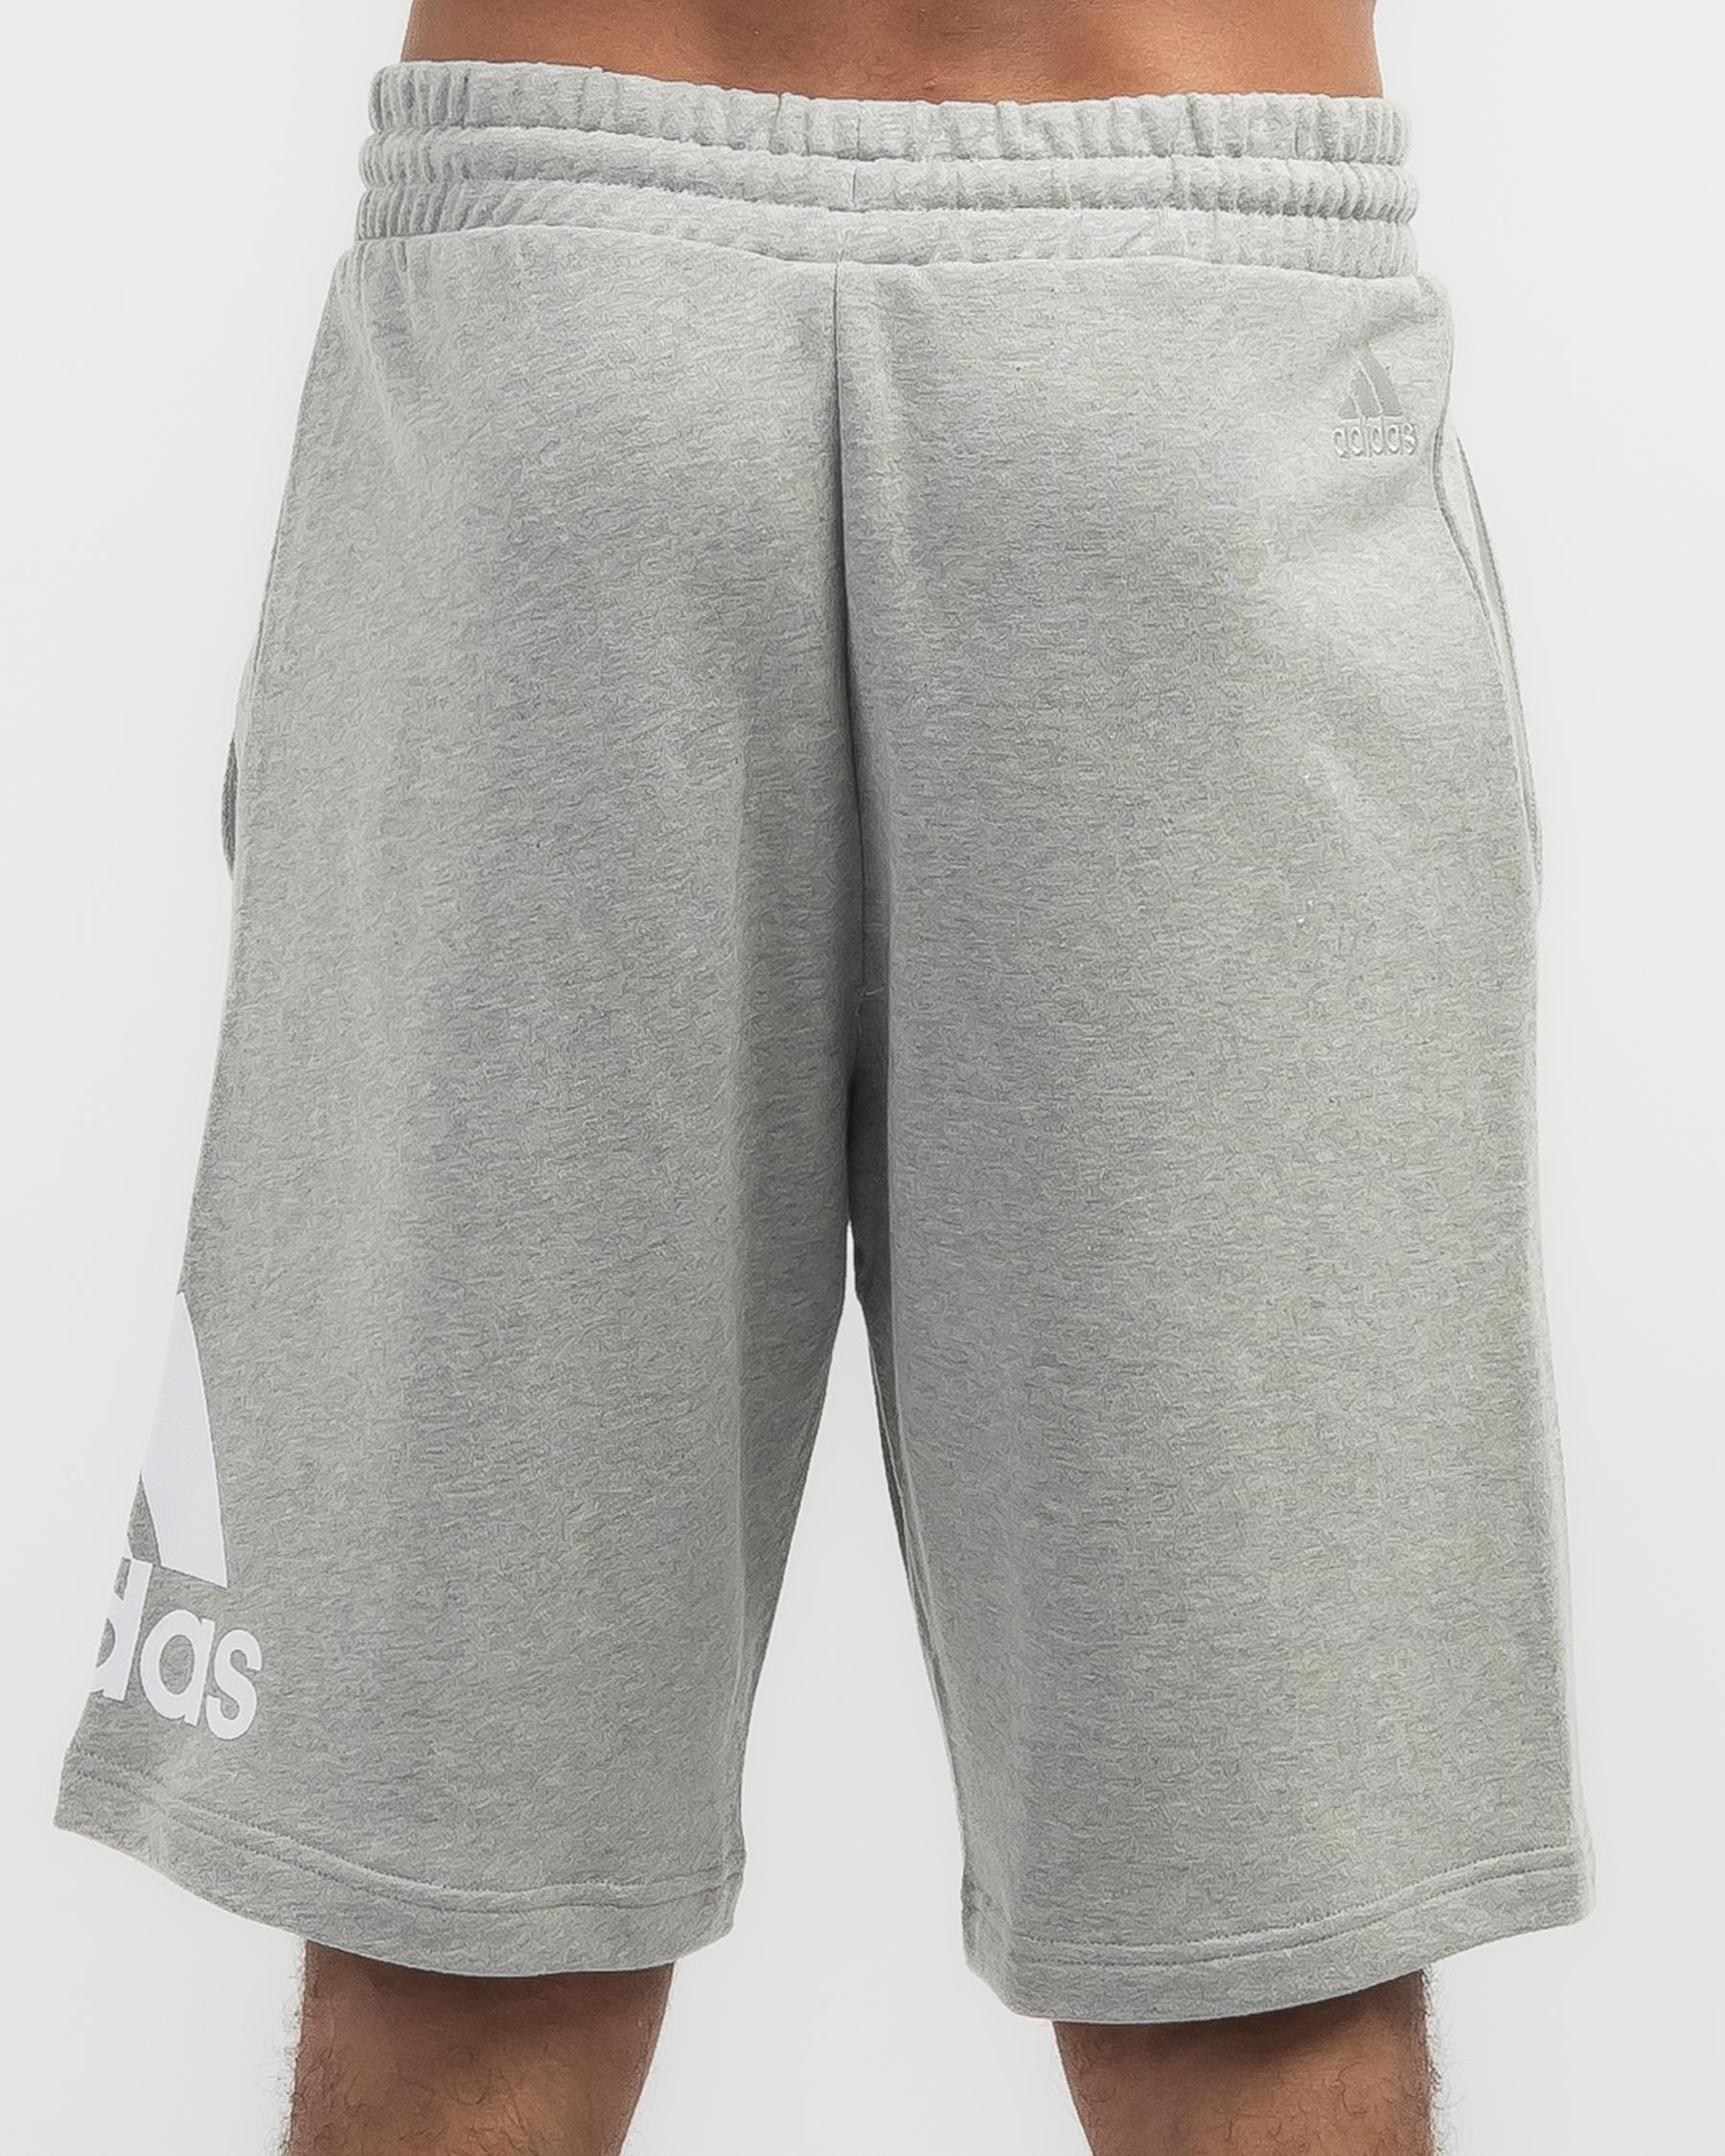 Adidas Boss Shorts In Medium Grey Heather - Fast Shipping & Easy ...